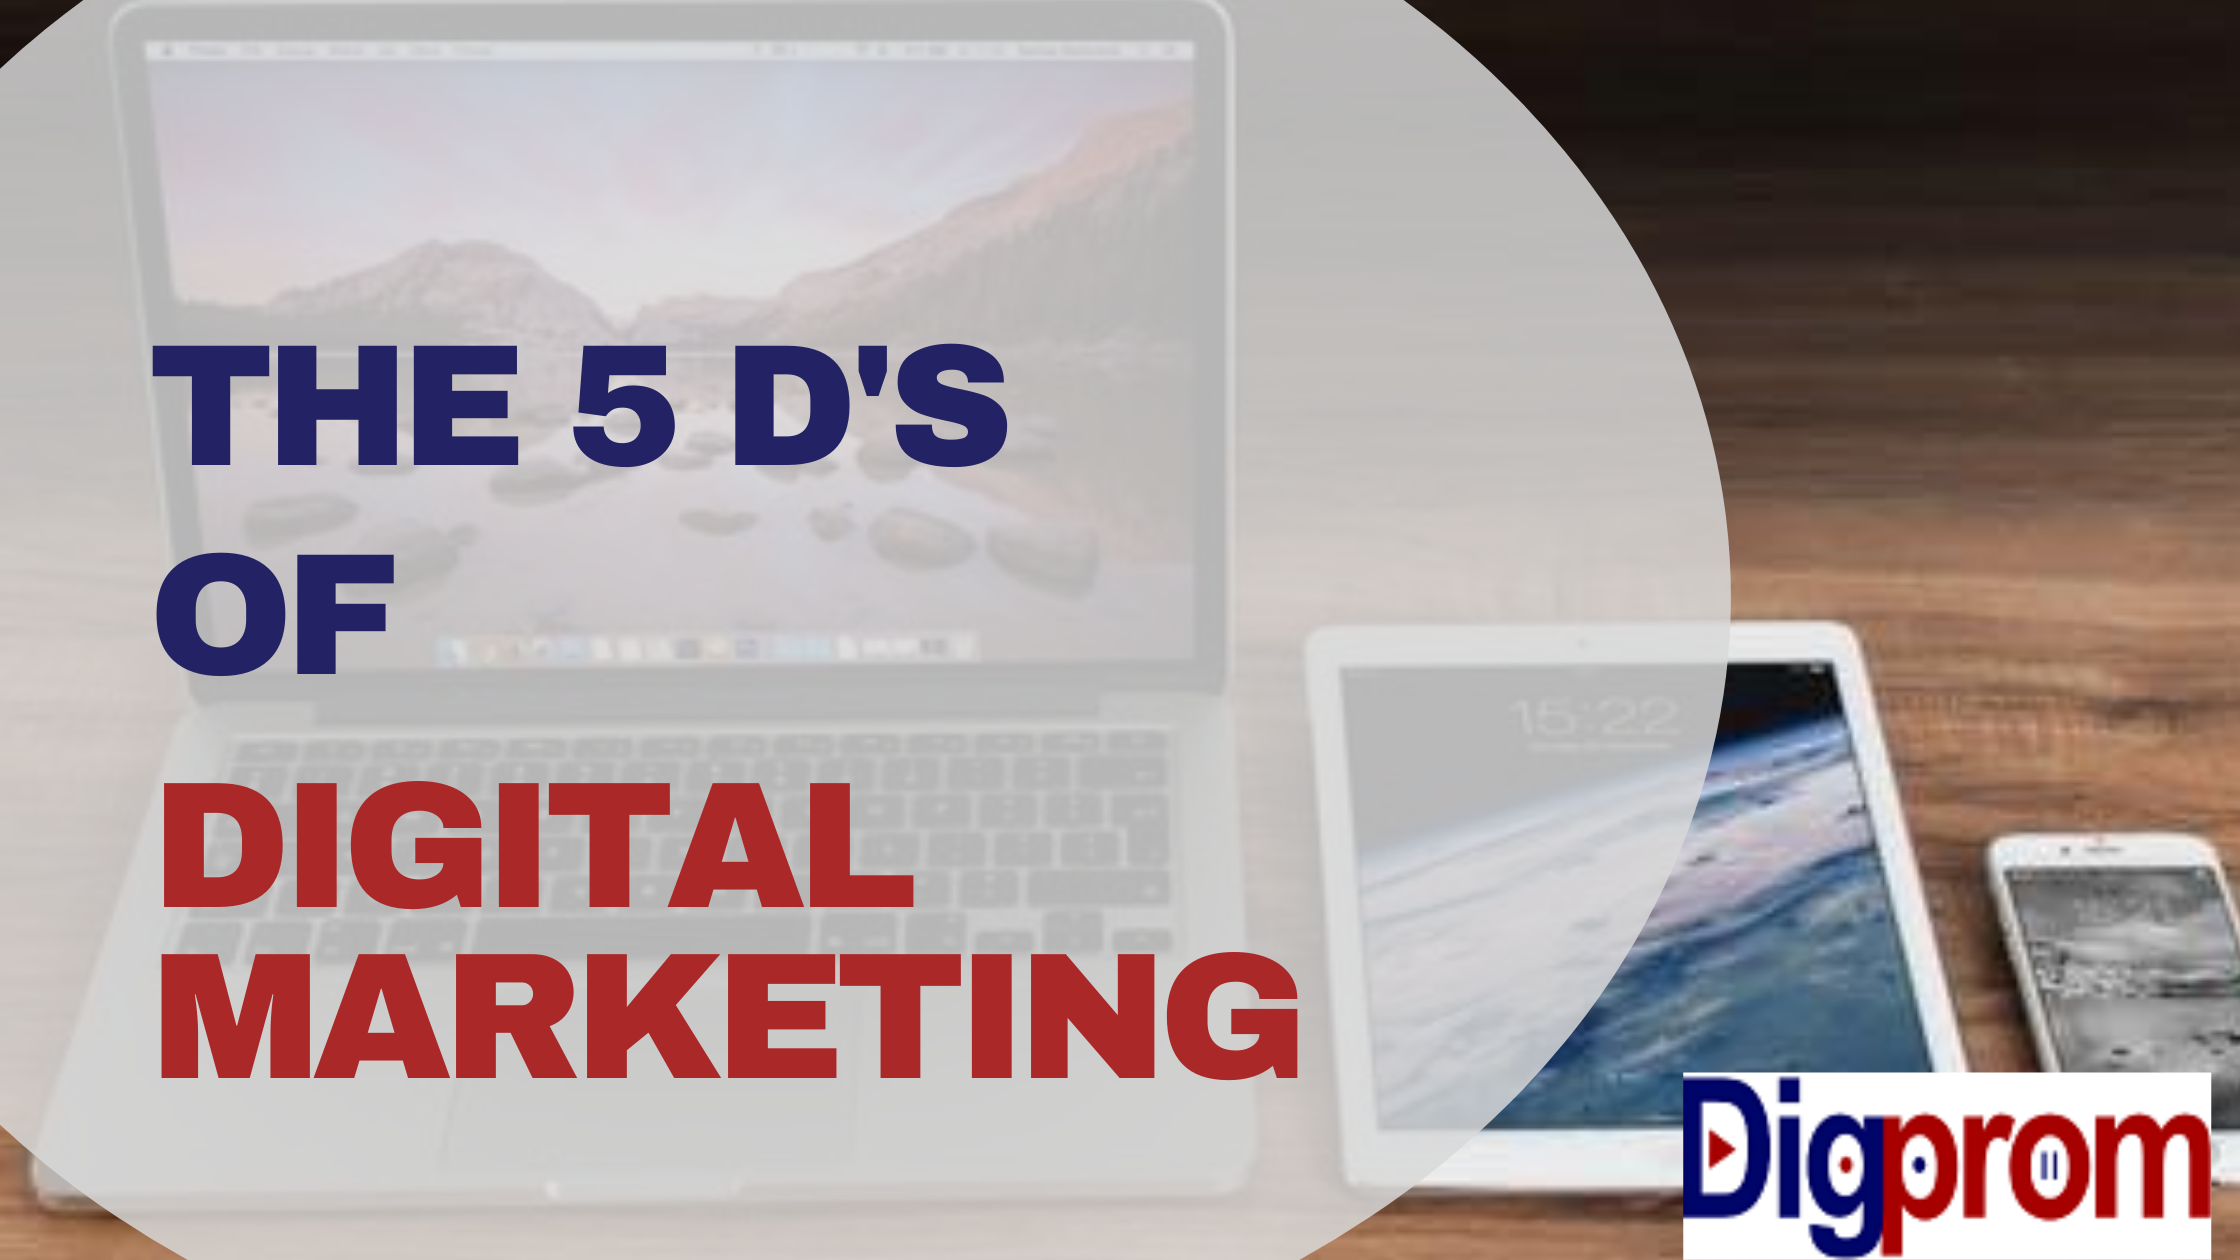 5 D's of digital marketing